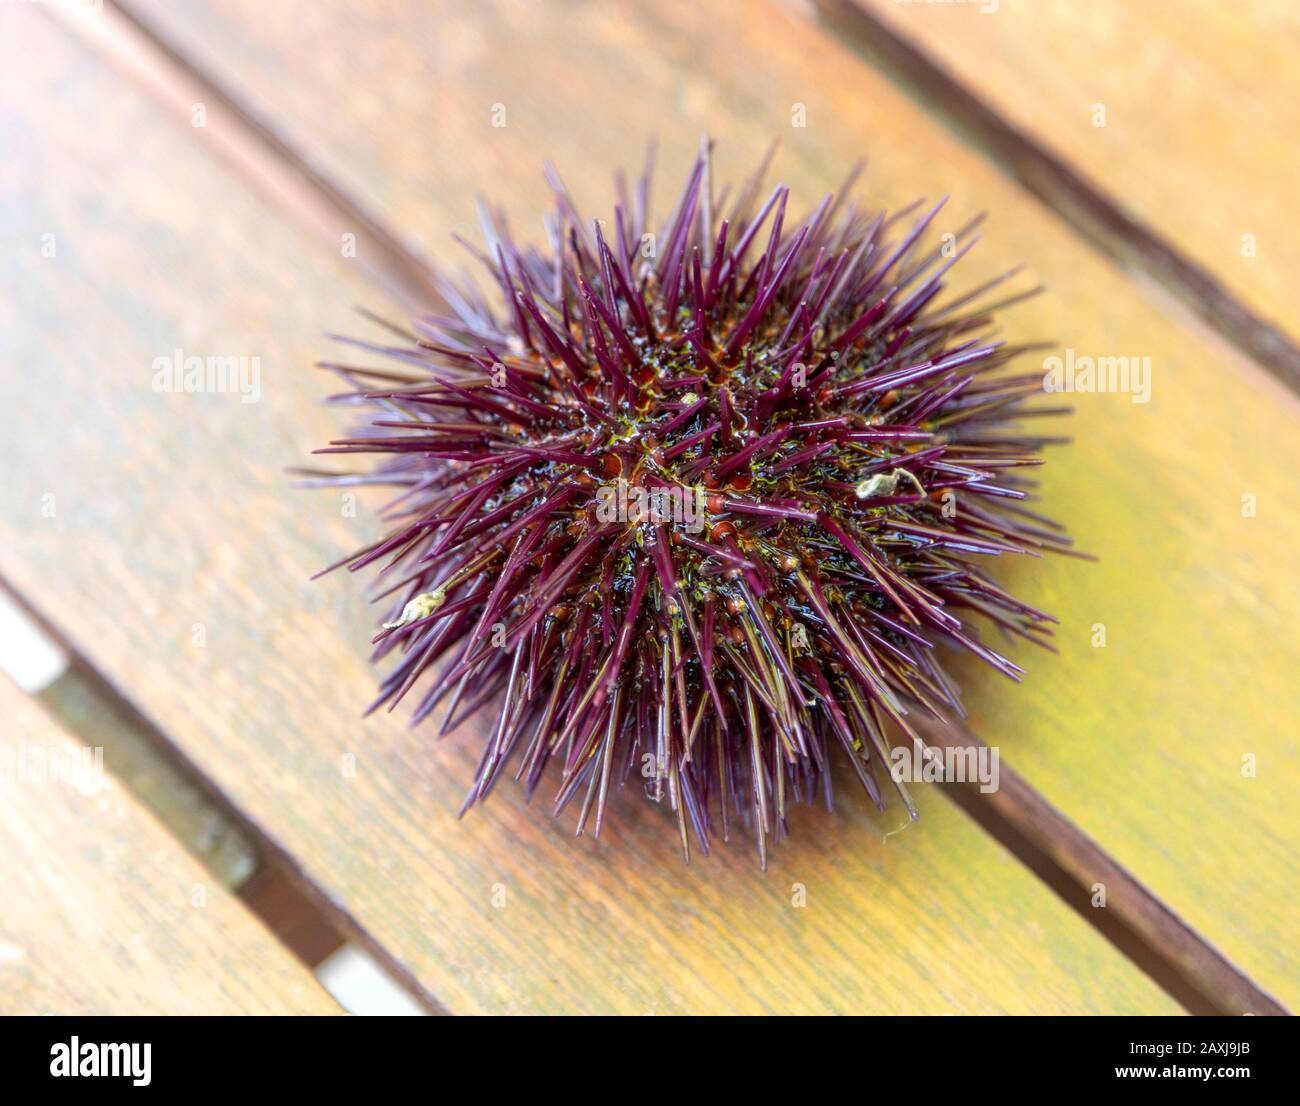 Meer Urchin, Paracentrotus lividus, lebend am Tisch, Atlantikküste, Rogil, Algarve, Portugal, Südeuropa Stockfoto